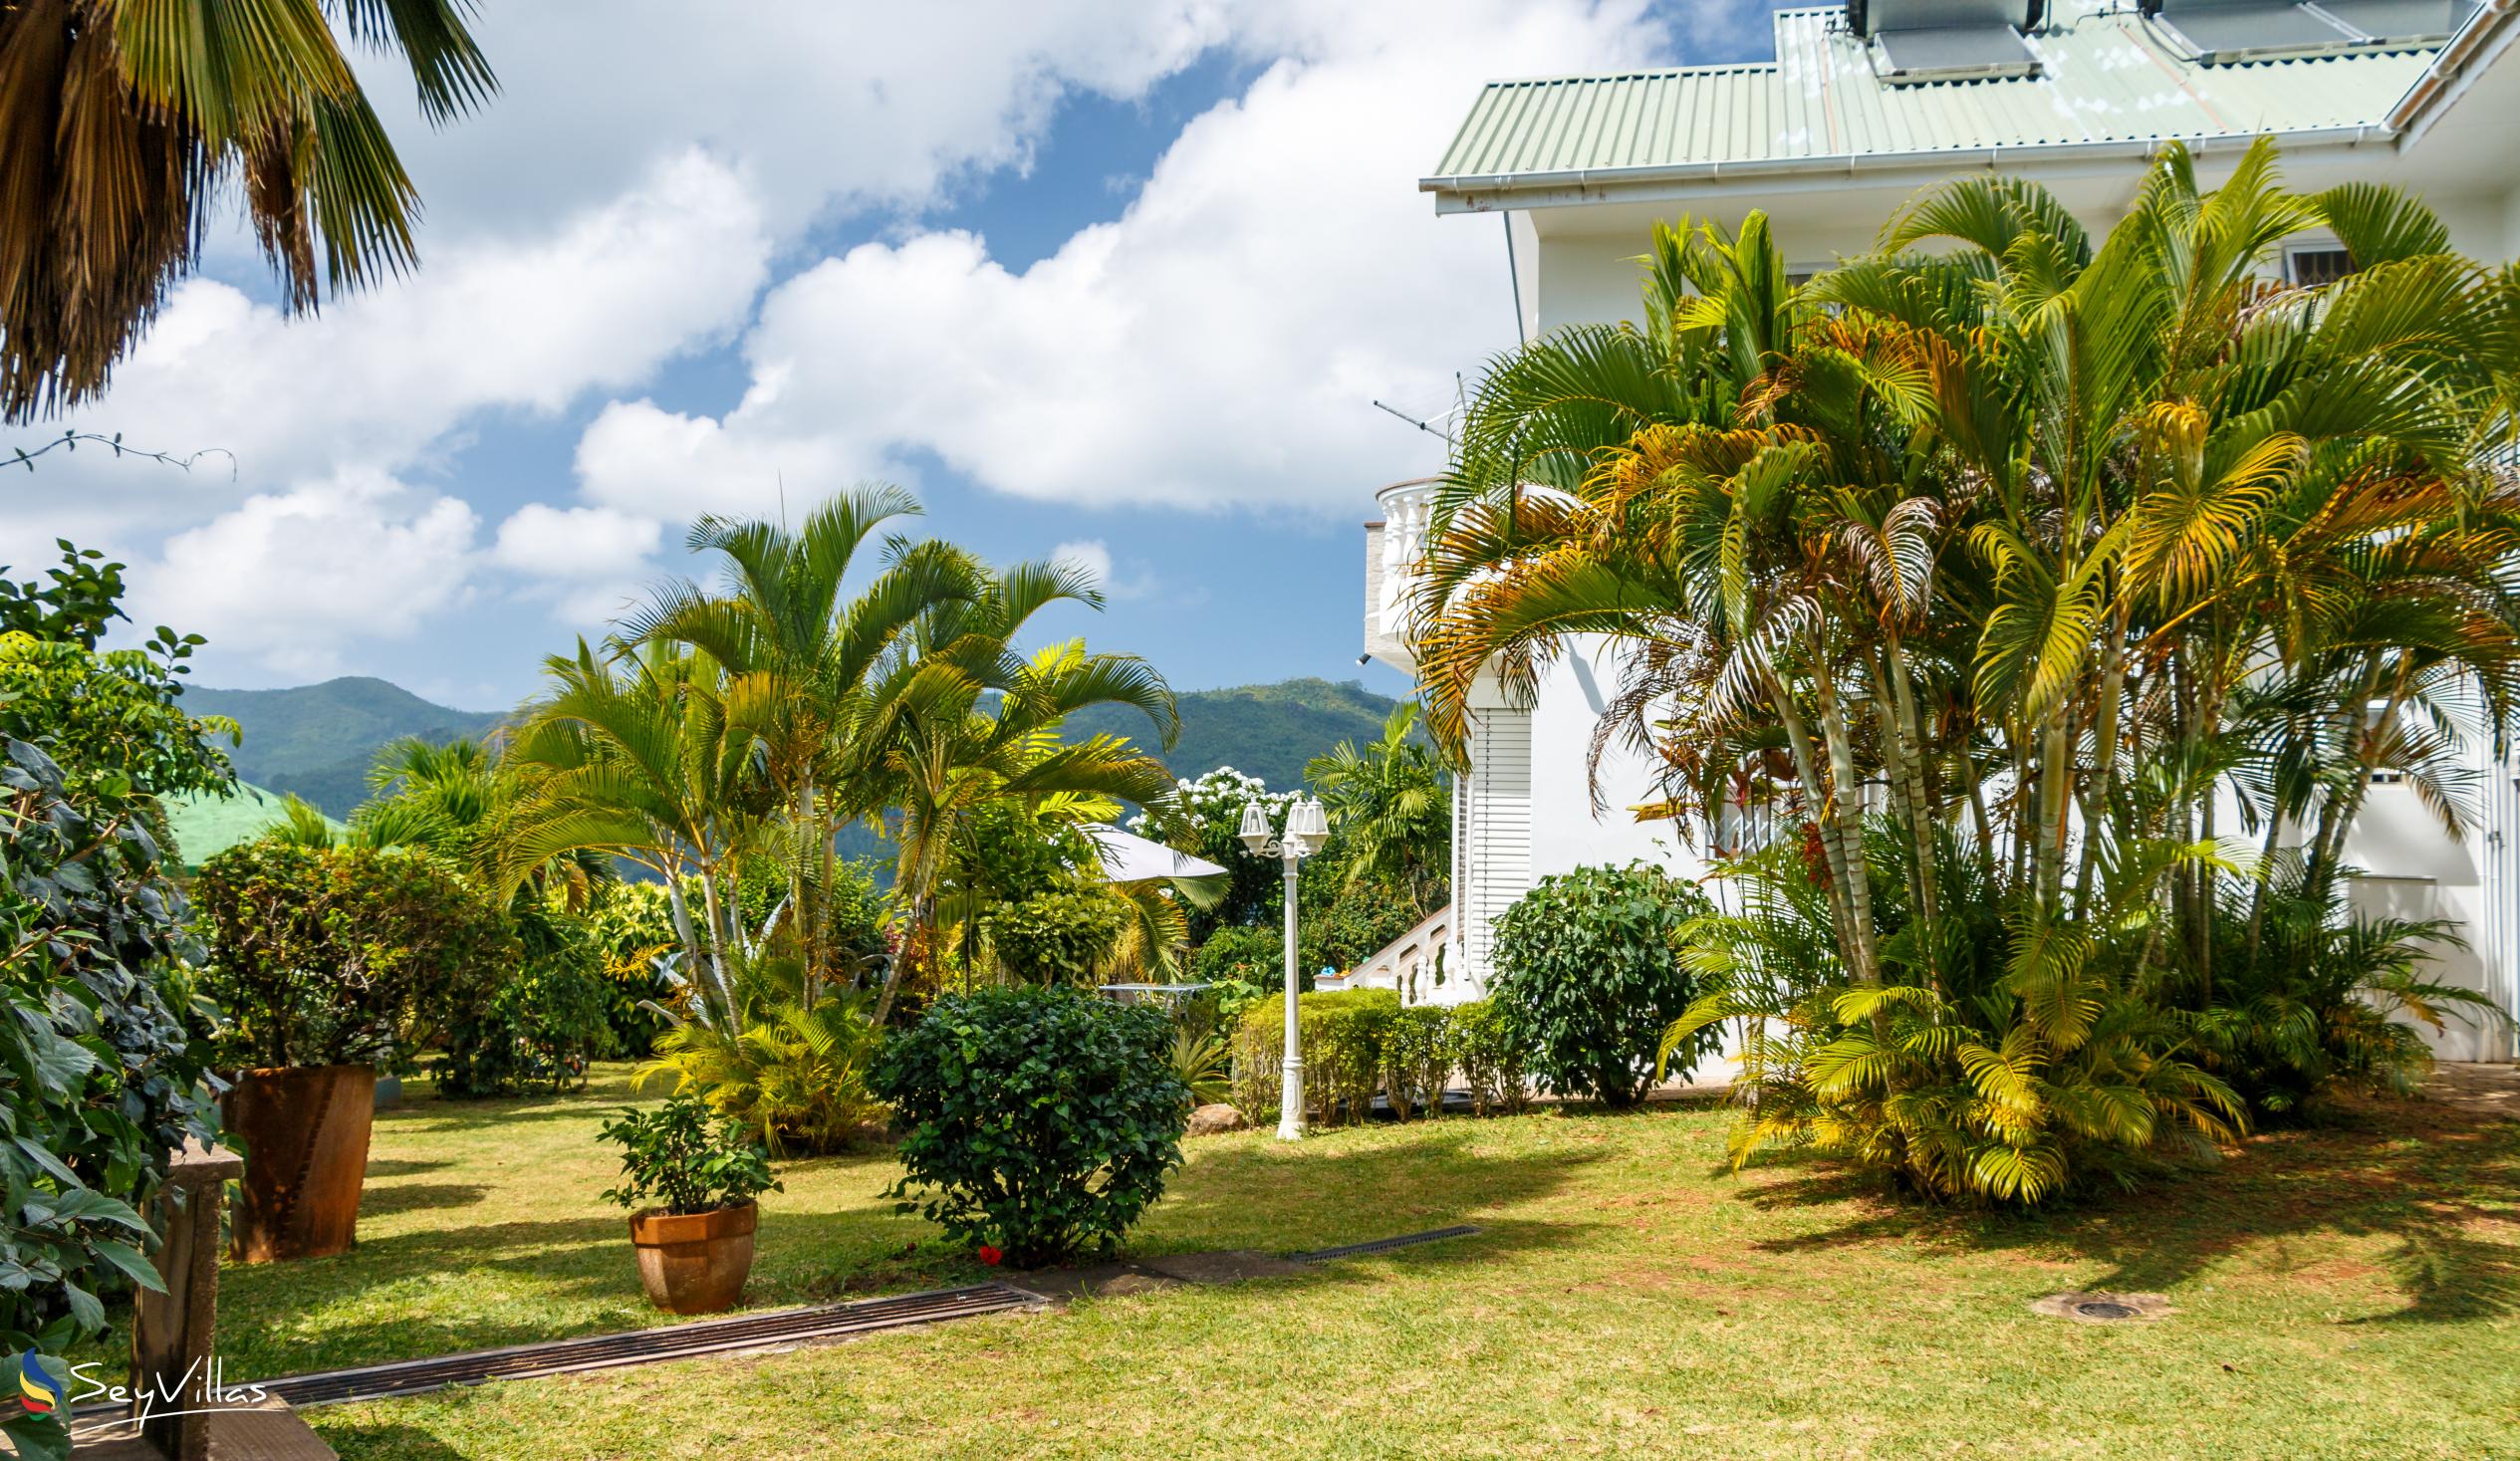 Photo 4: Villa Bel Age - Outdoor area - Mahé (Seychelles)